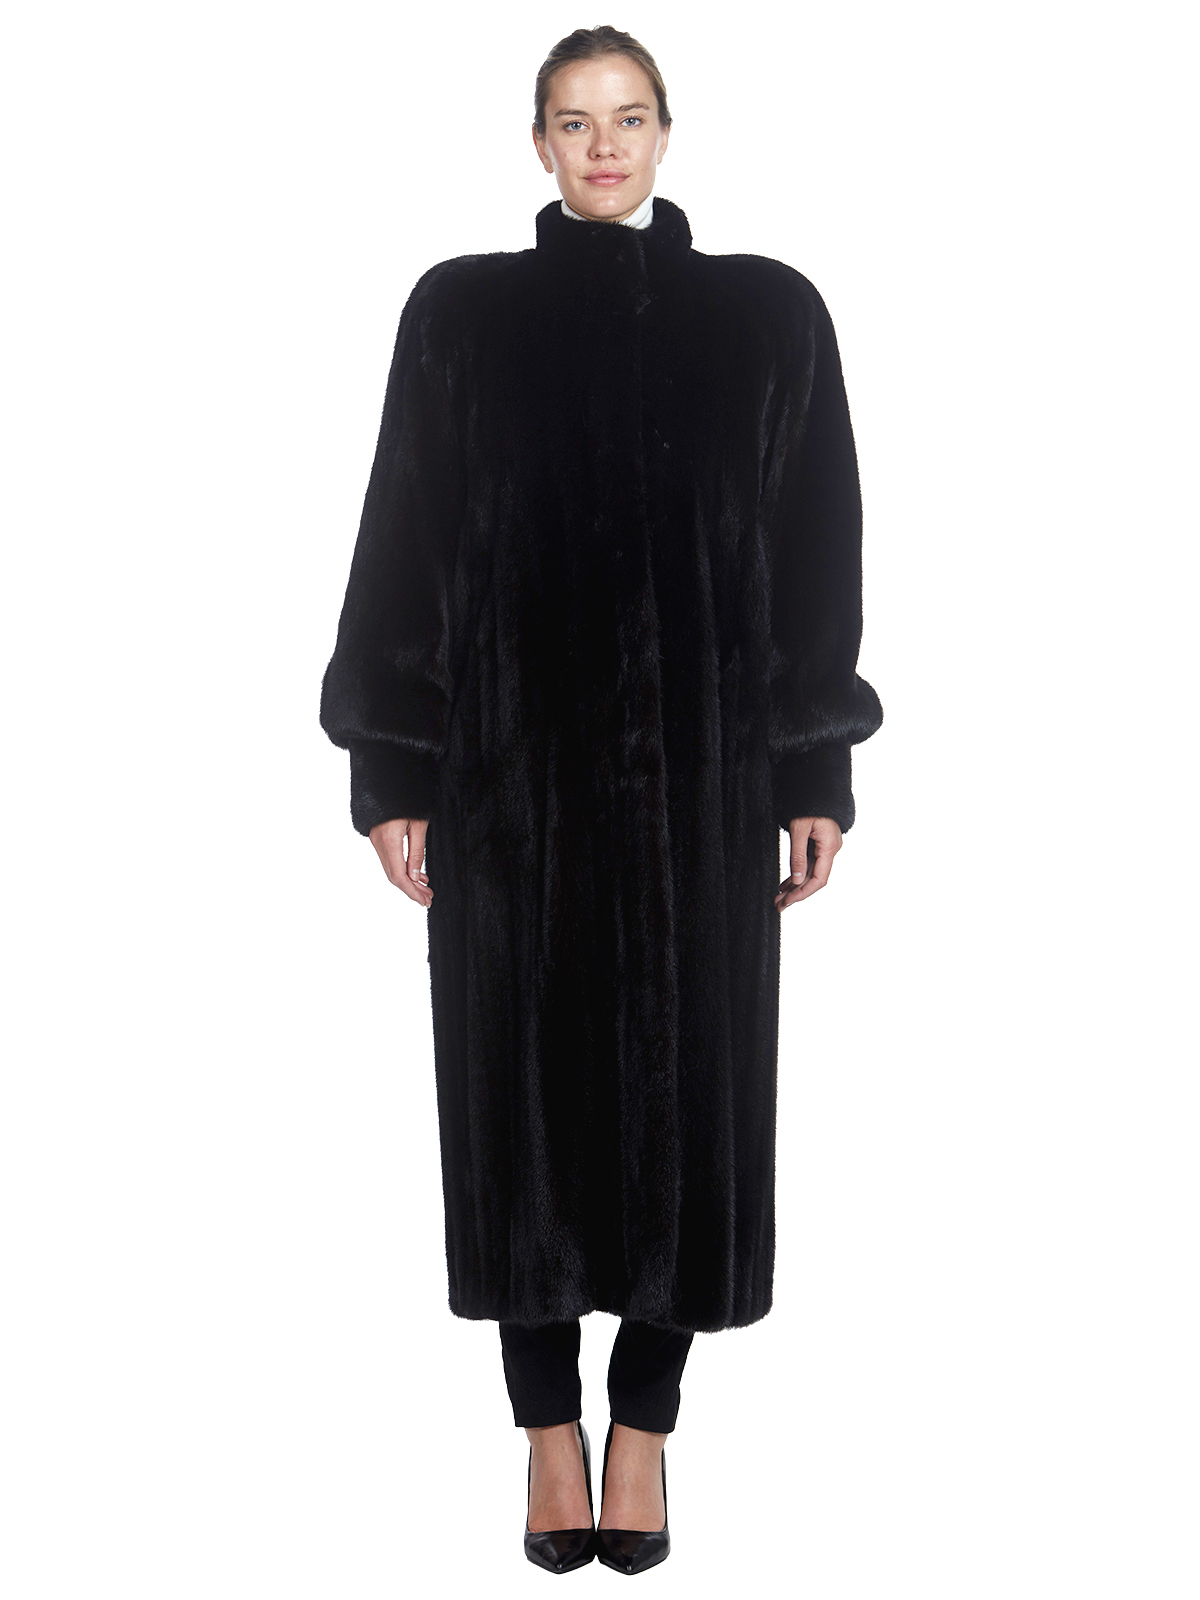 Michael Forrest Full Length Ranch Mink Fur Coat - Women's Fur Coat